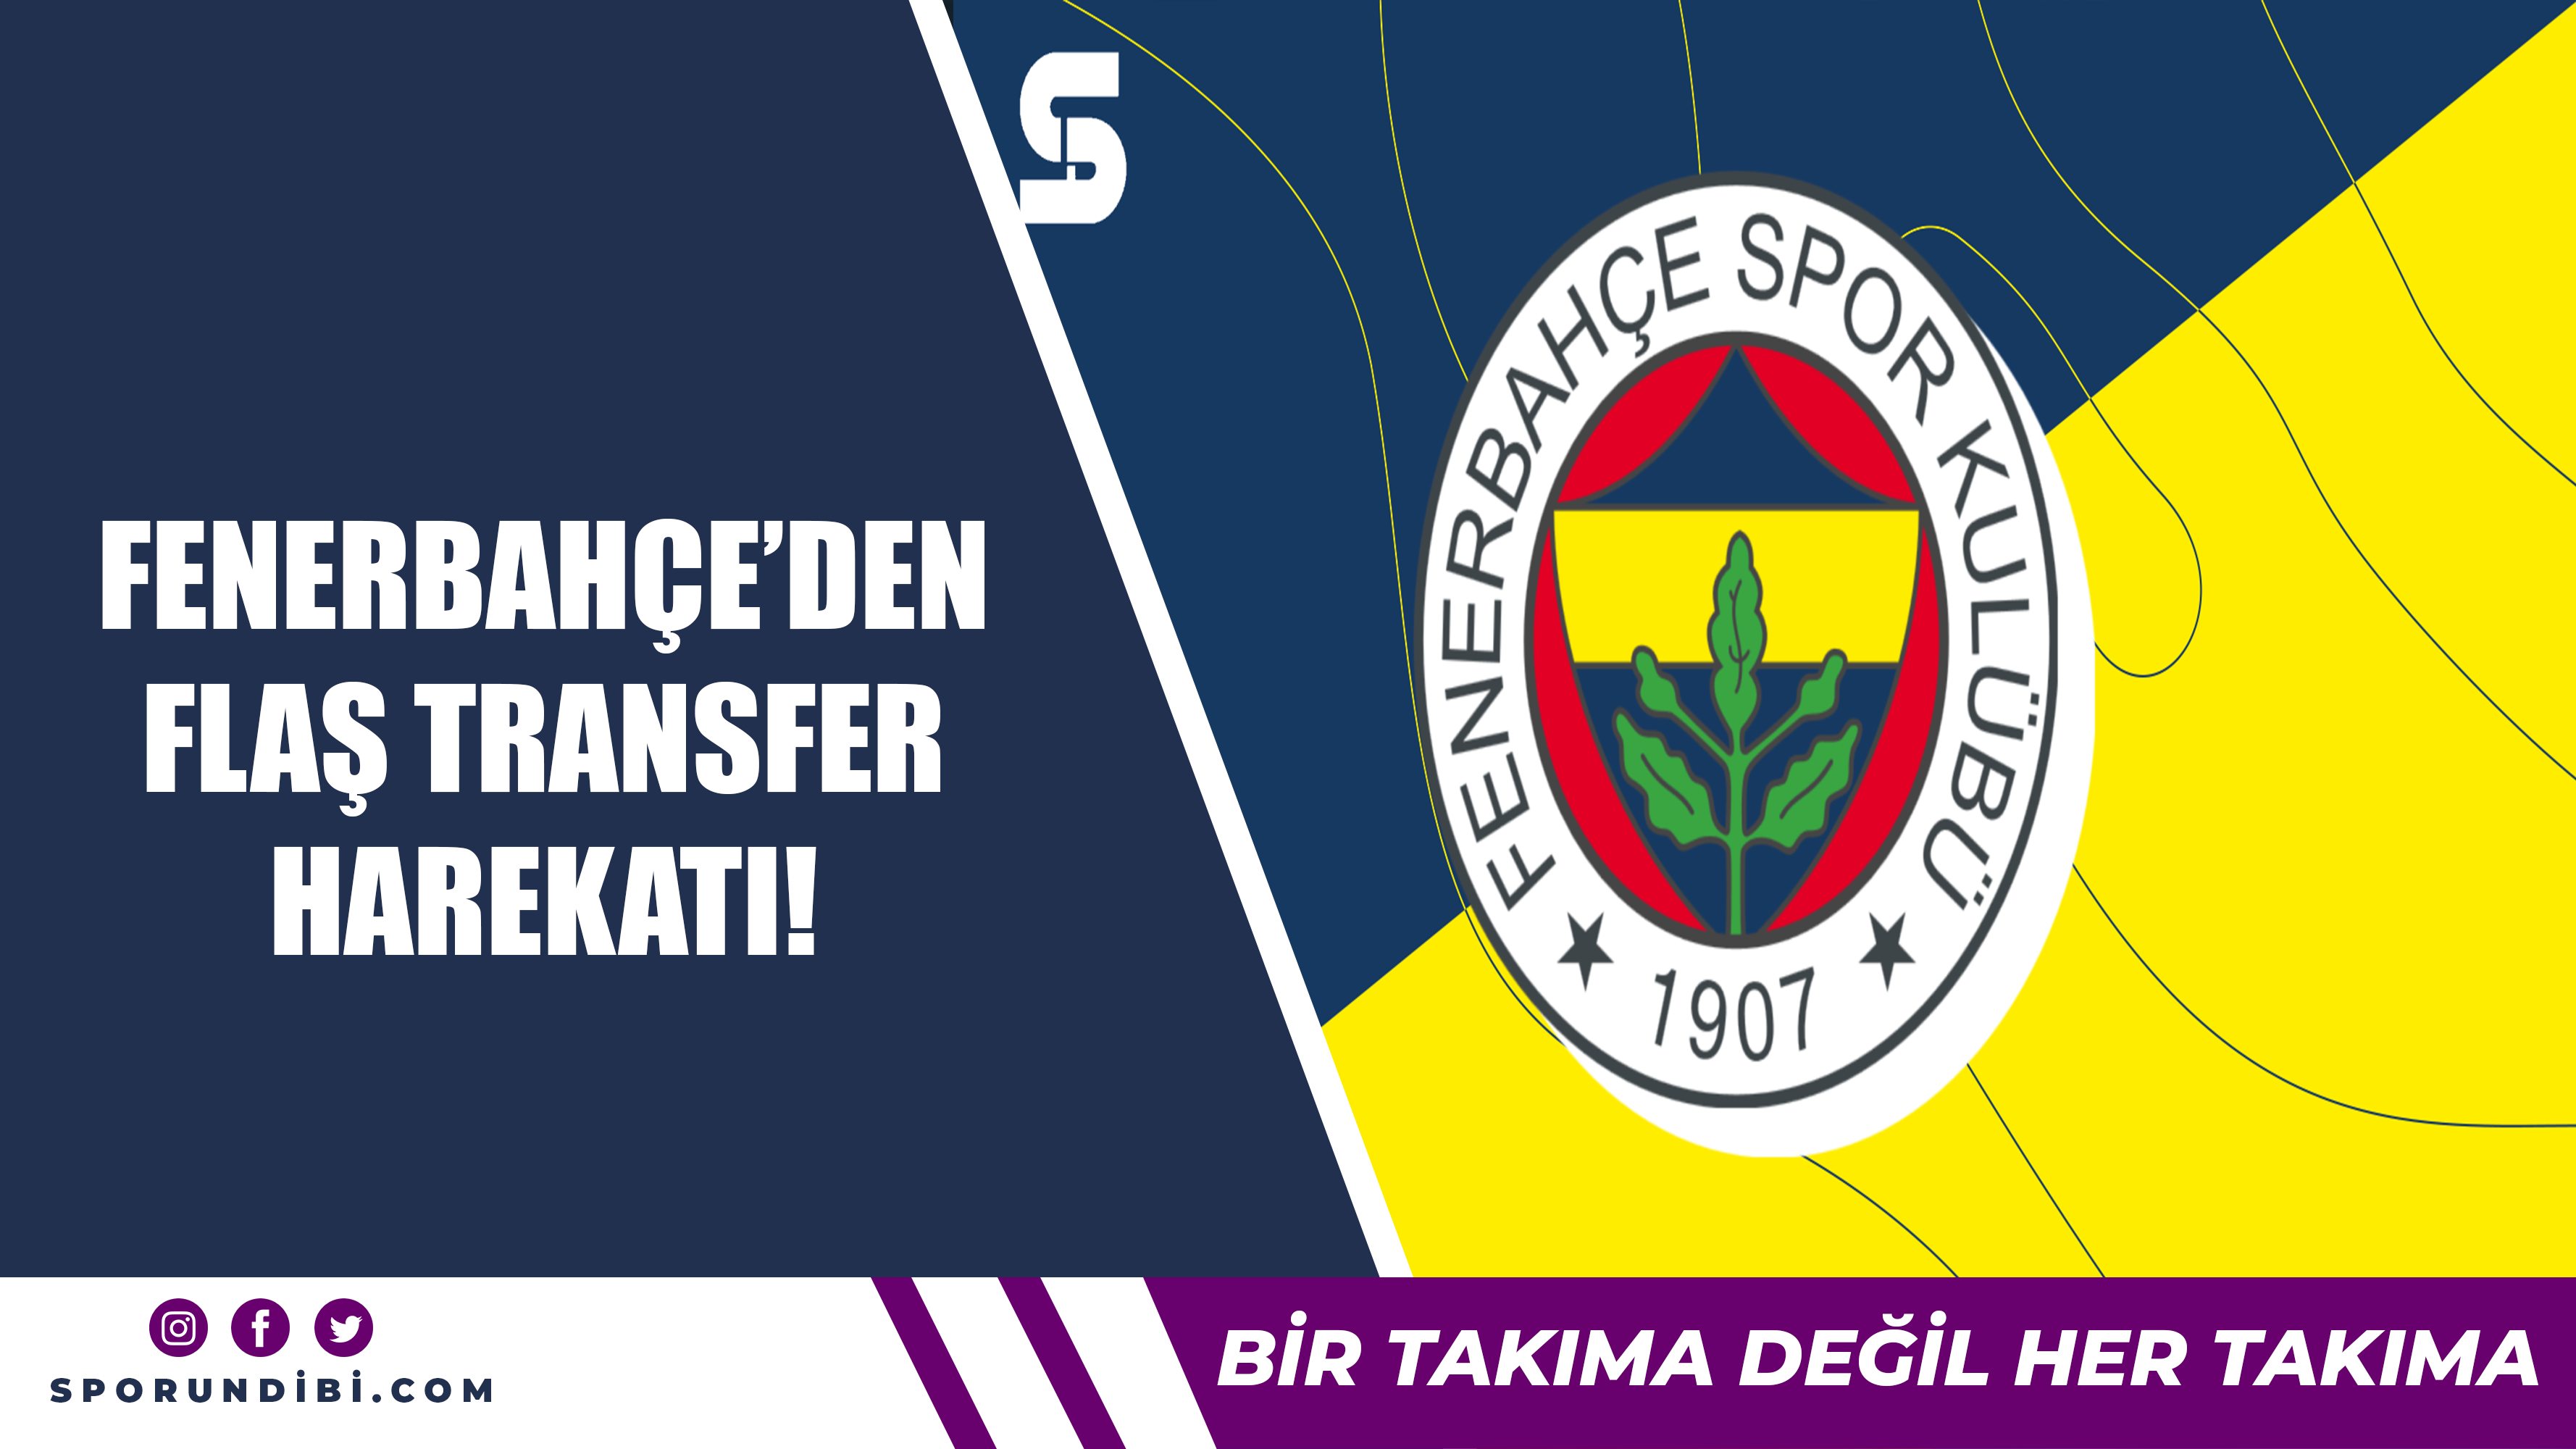 Fenerbahçe'den flaş transfer harekatı!